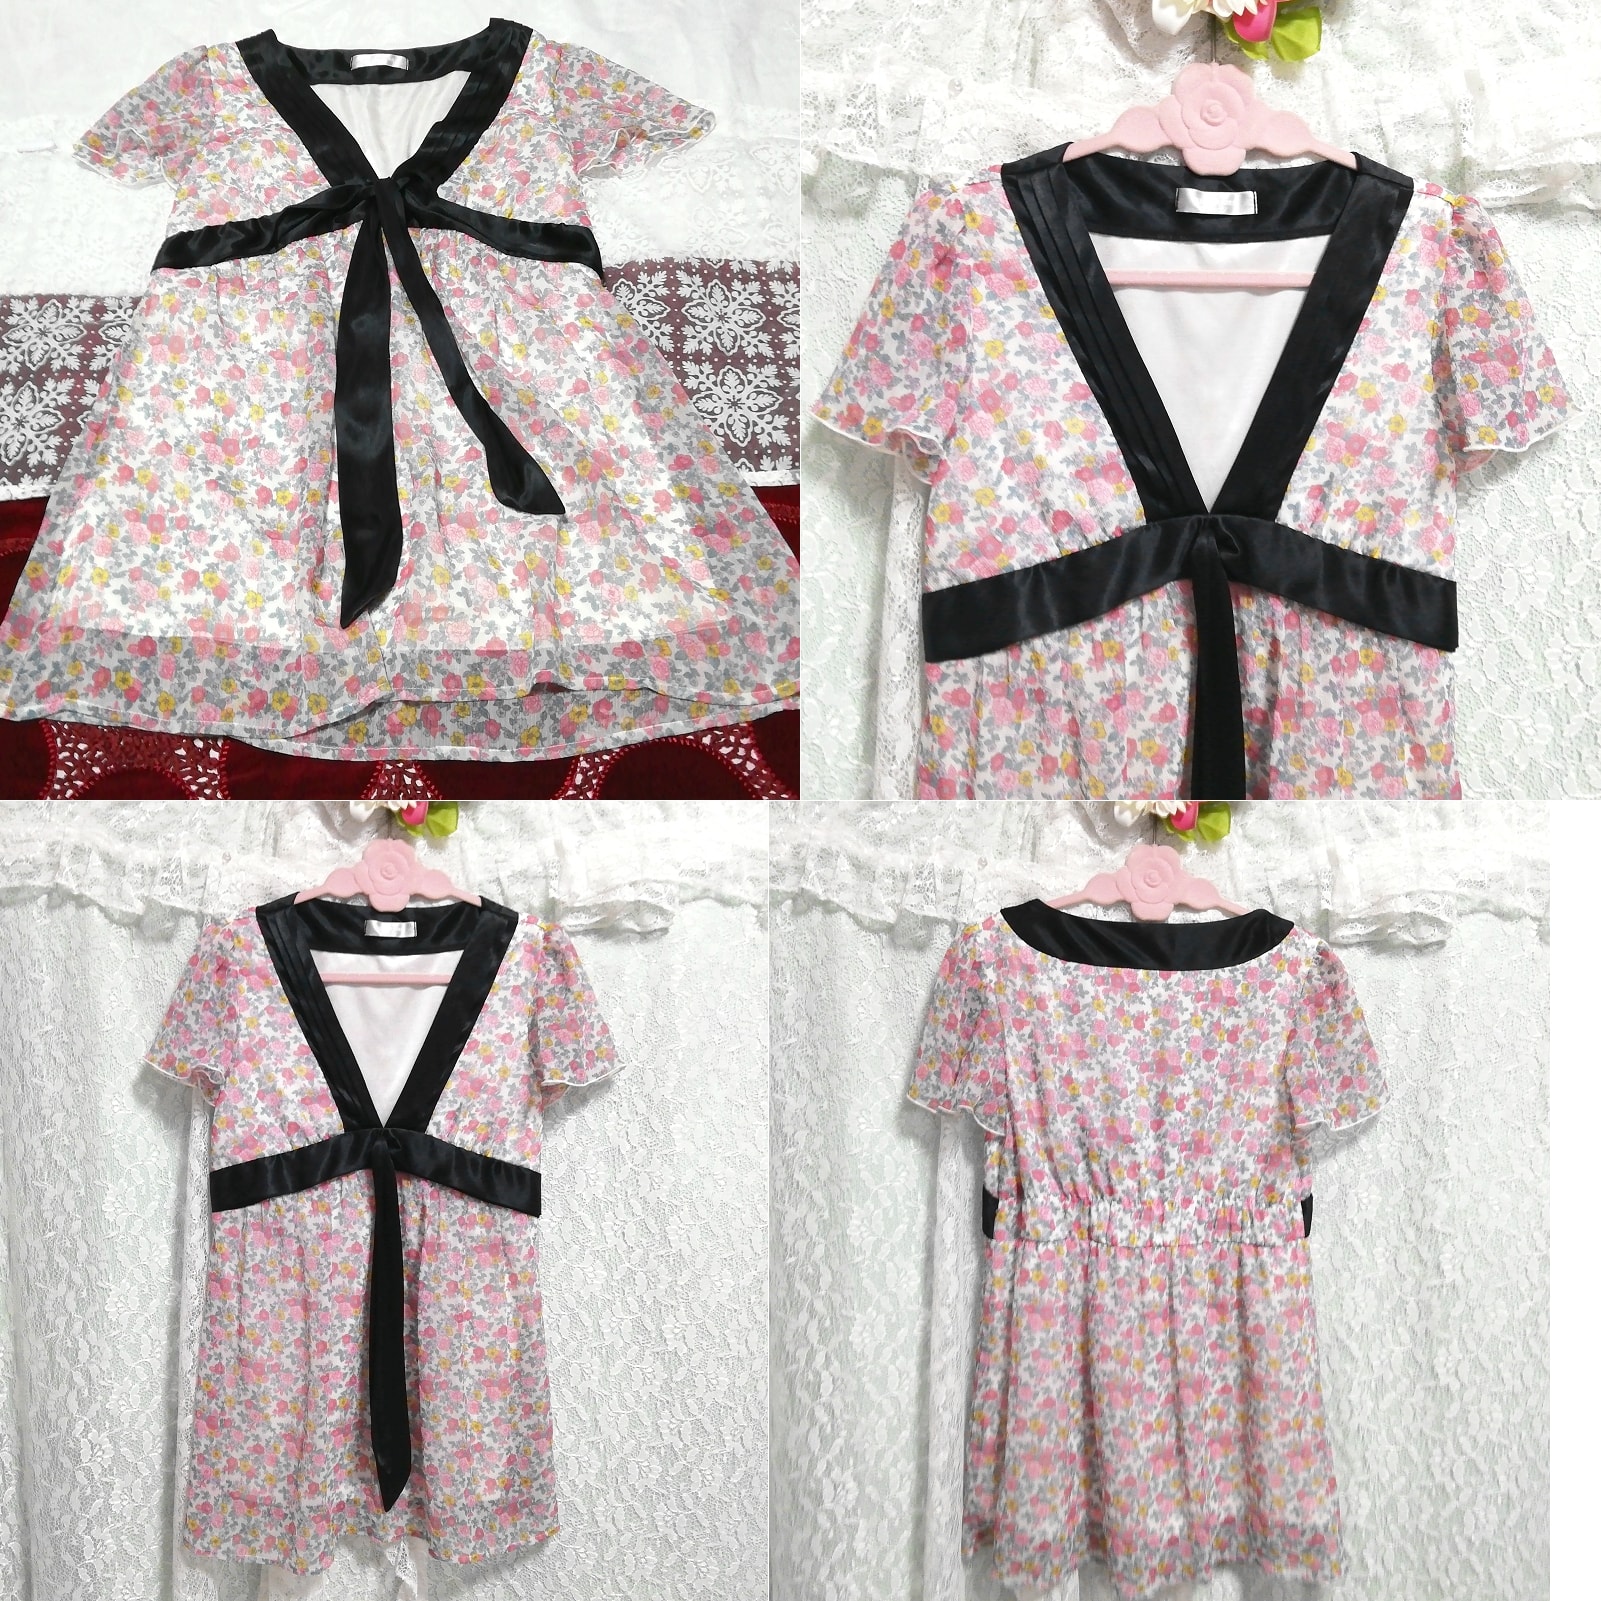 Black v-neck floral print chiffon negligee nightgown tunic dress, knee length skirt, m size